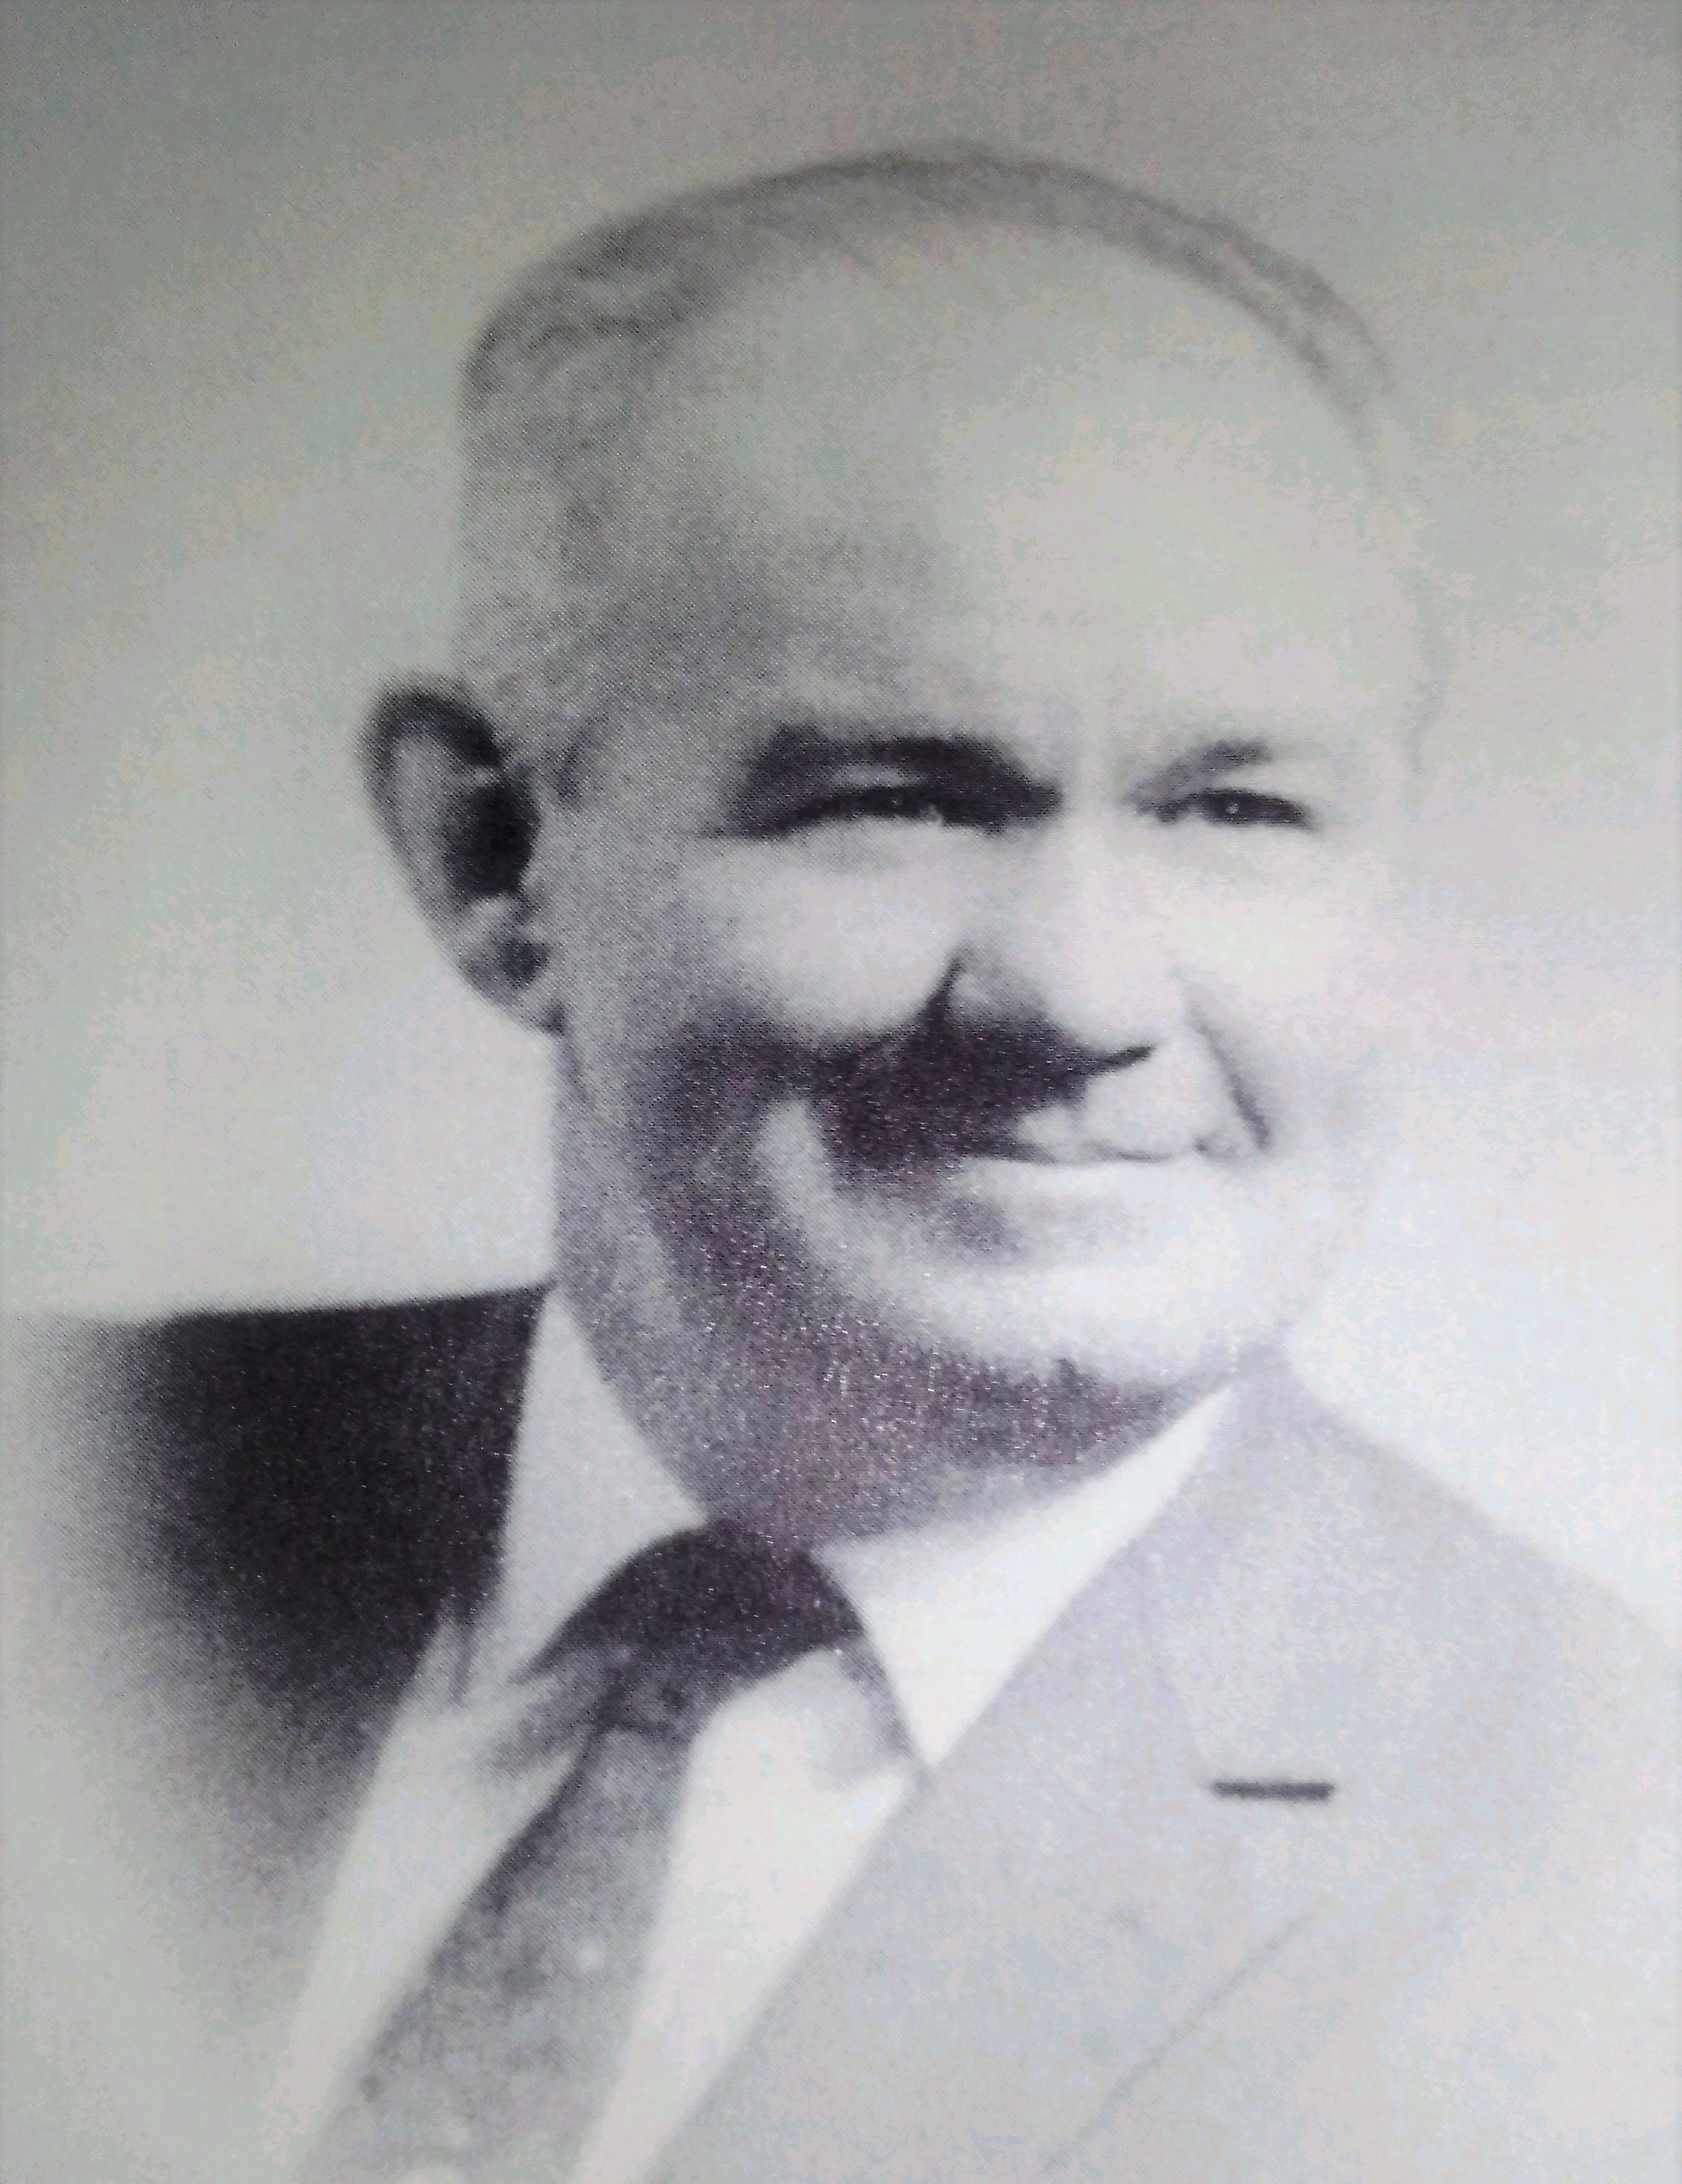 Obituary information for Elmer H. Palmer